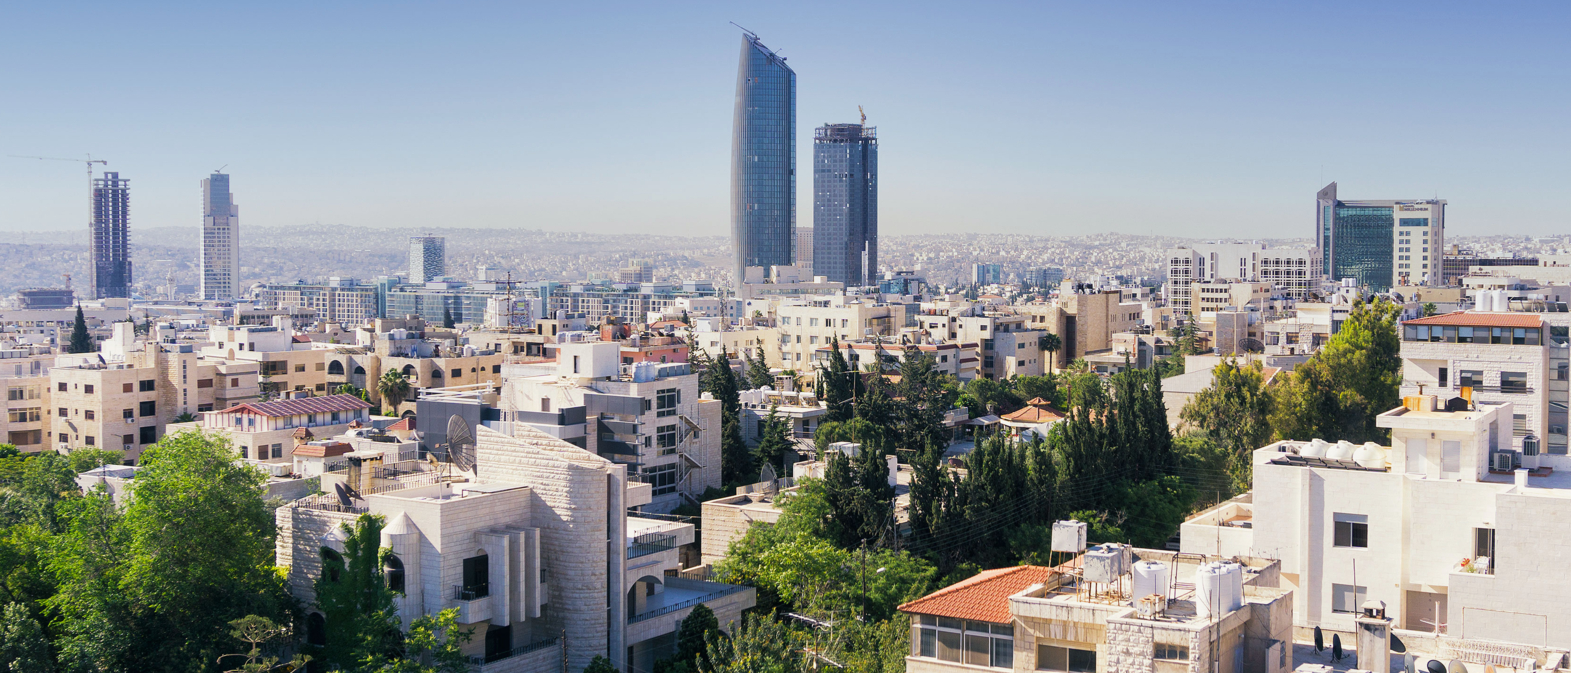 Amman city view, in Jordan